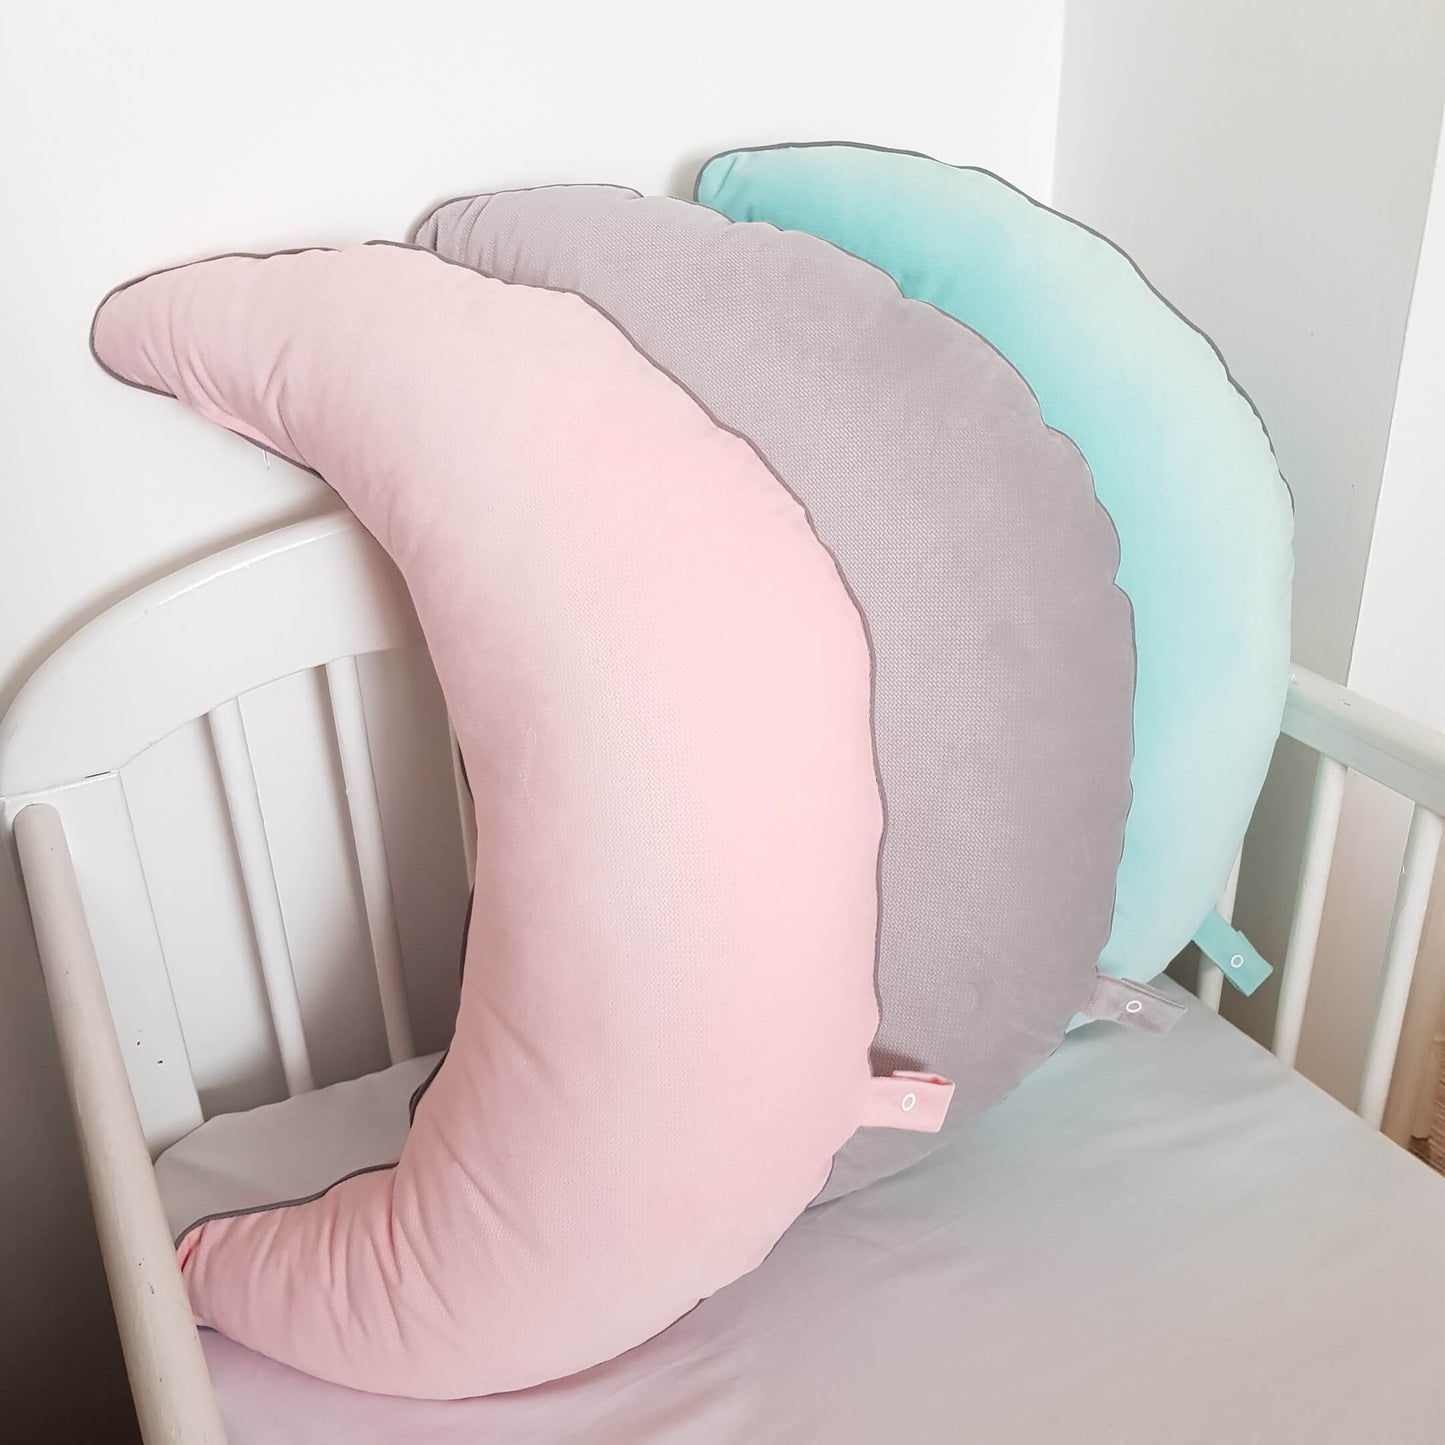 evcushy best pillows for feeding babies in Ireland handmade 